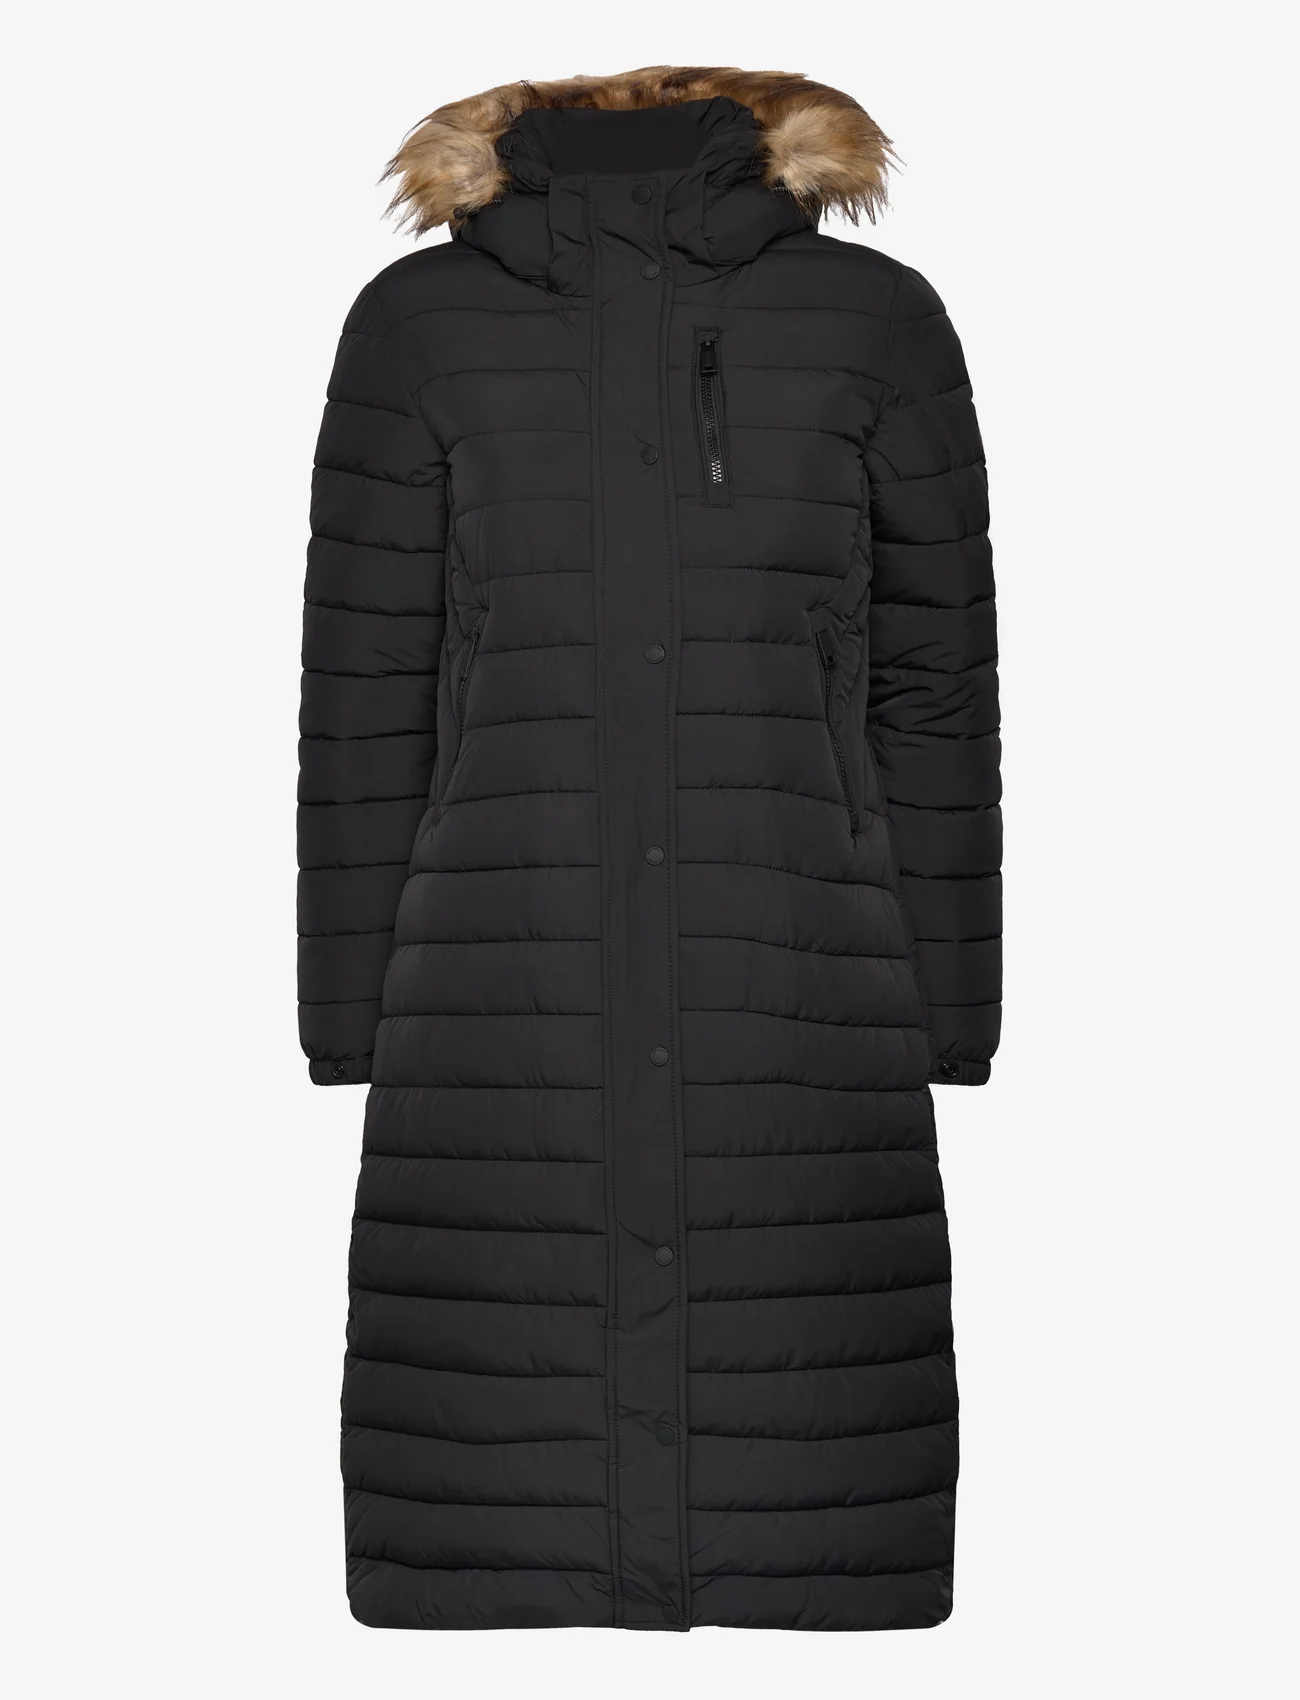 Superdry - FUJI HOODED LONGLINE PUFFER - winter jackets - black - 0